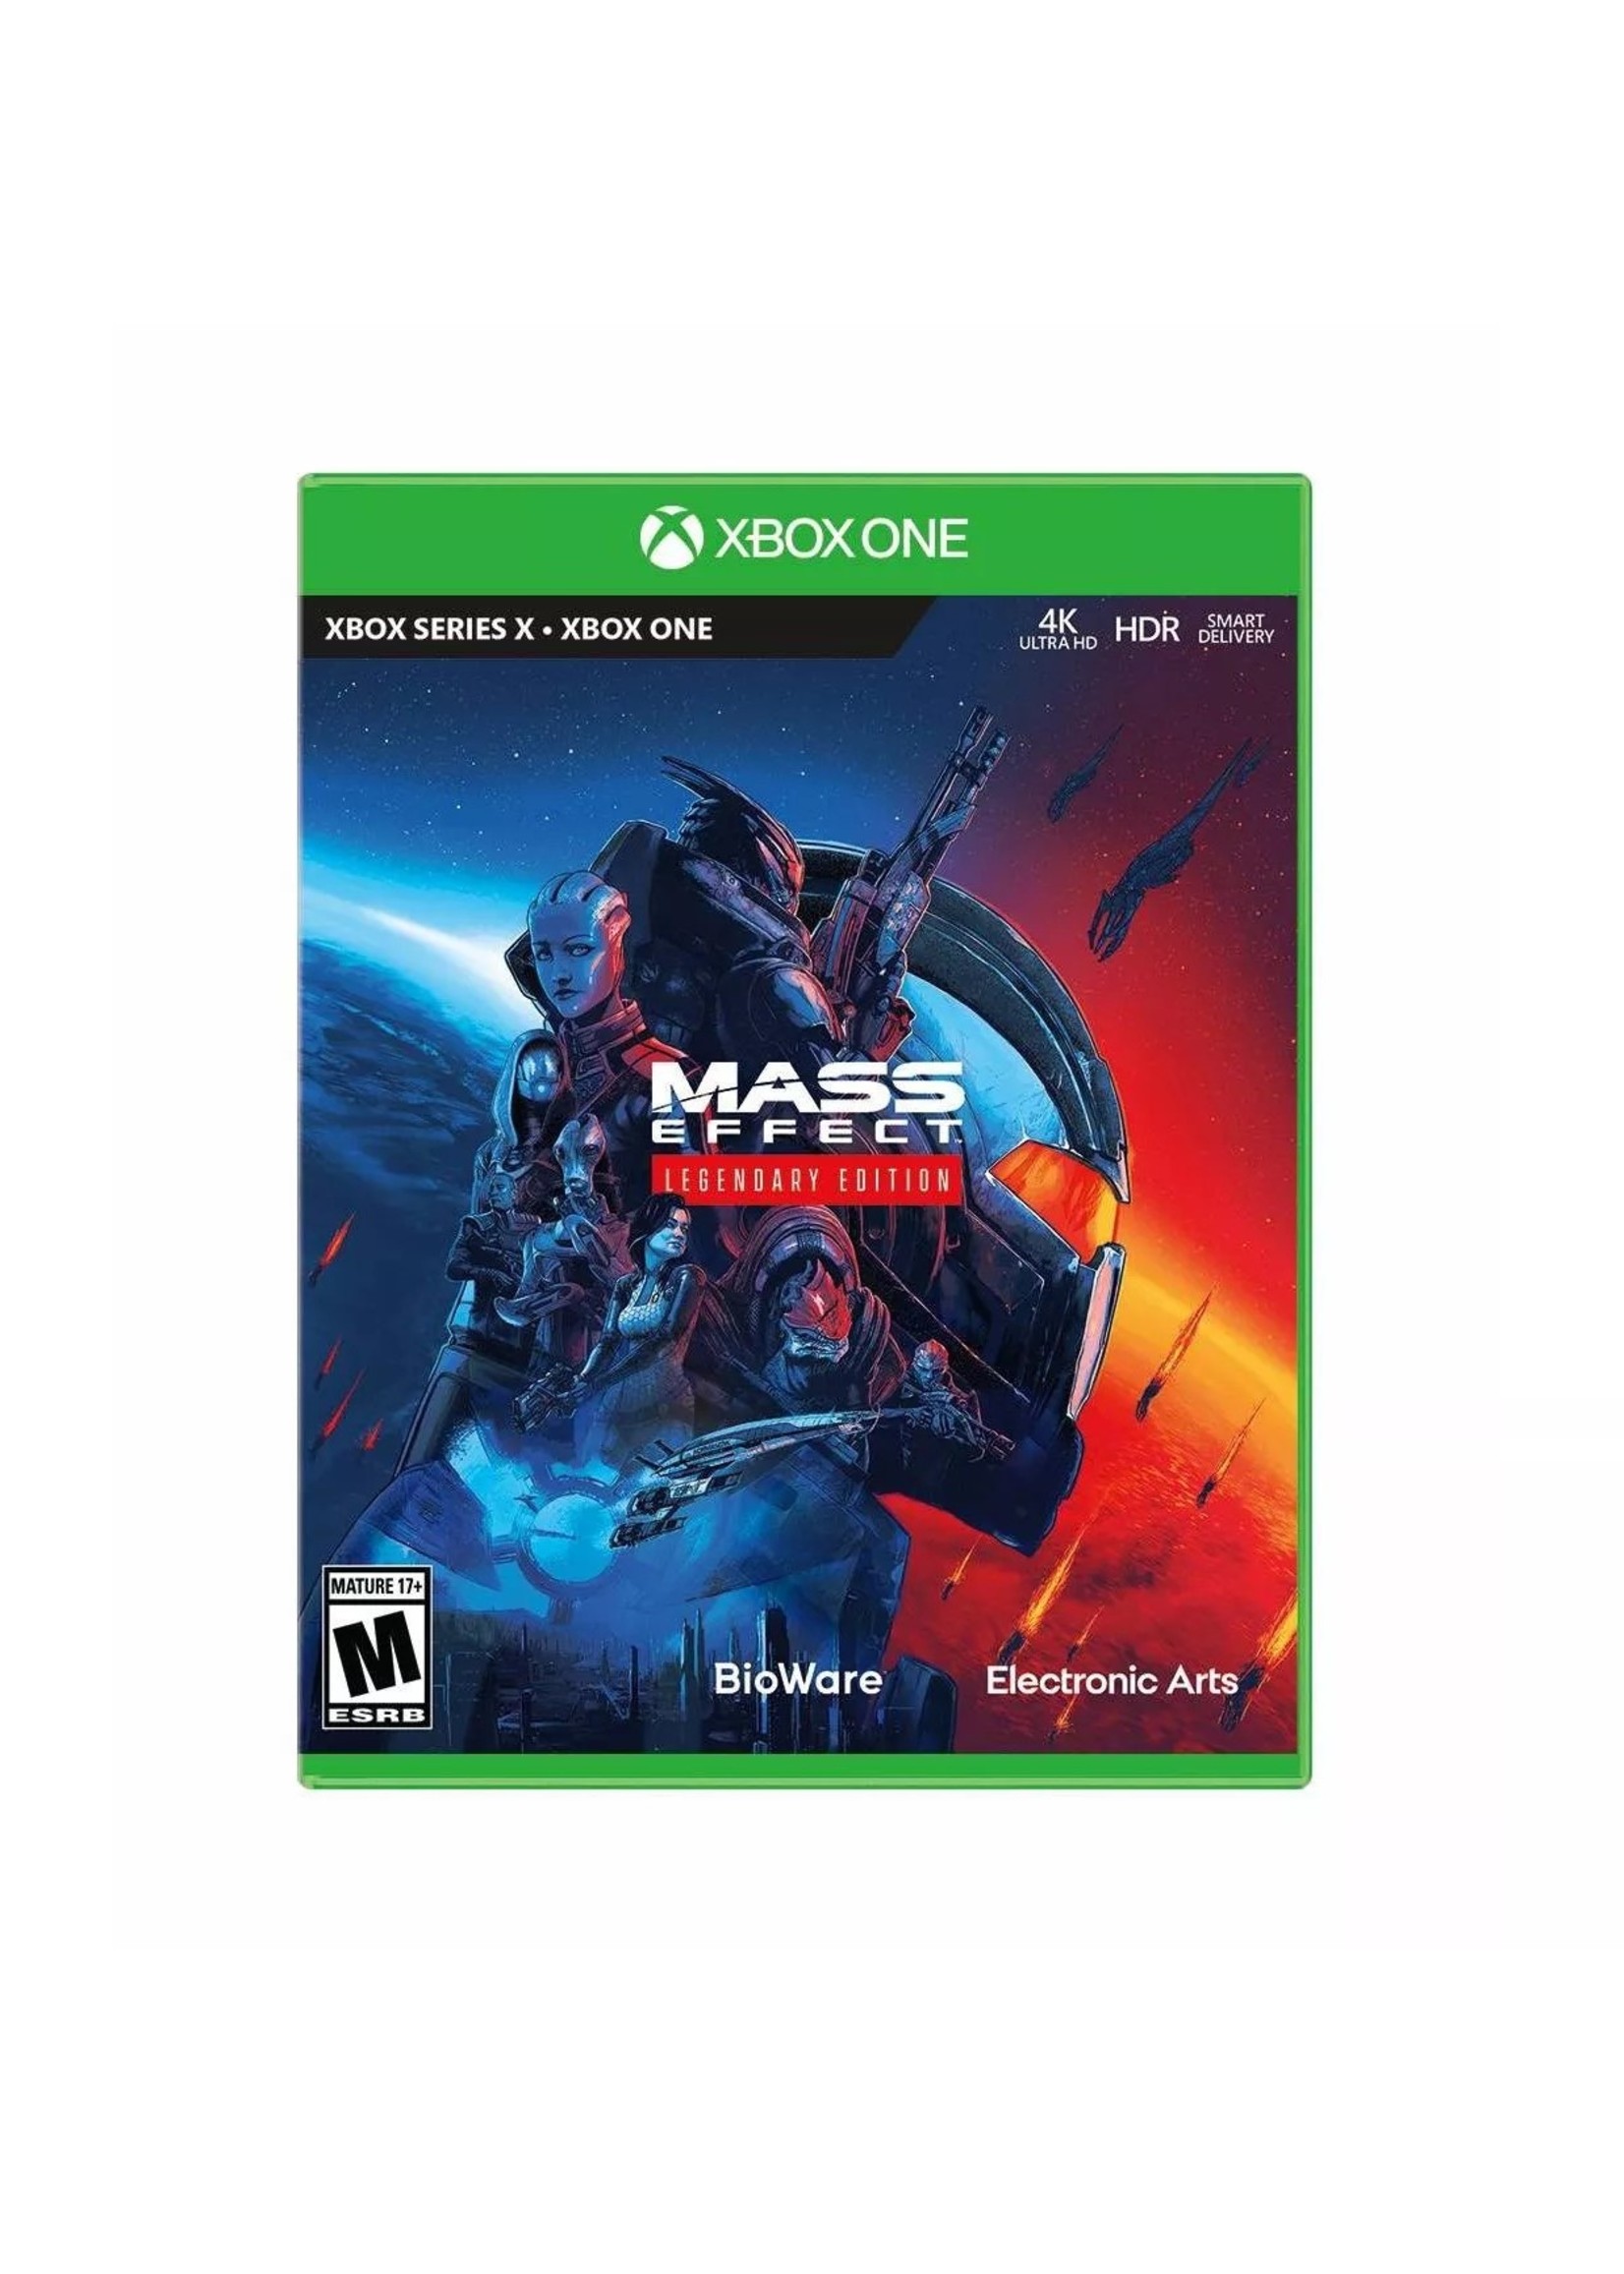 Mass Effect: Legendary Edition - XBOne NEW